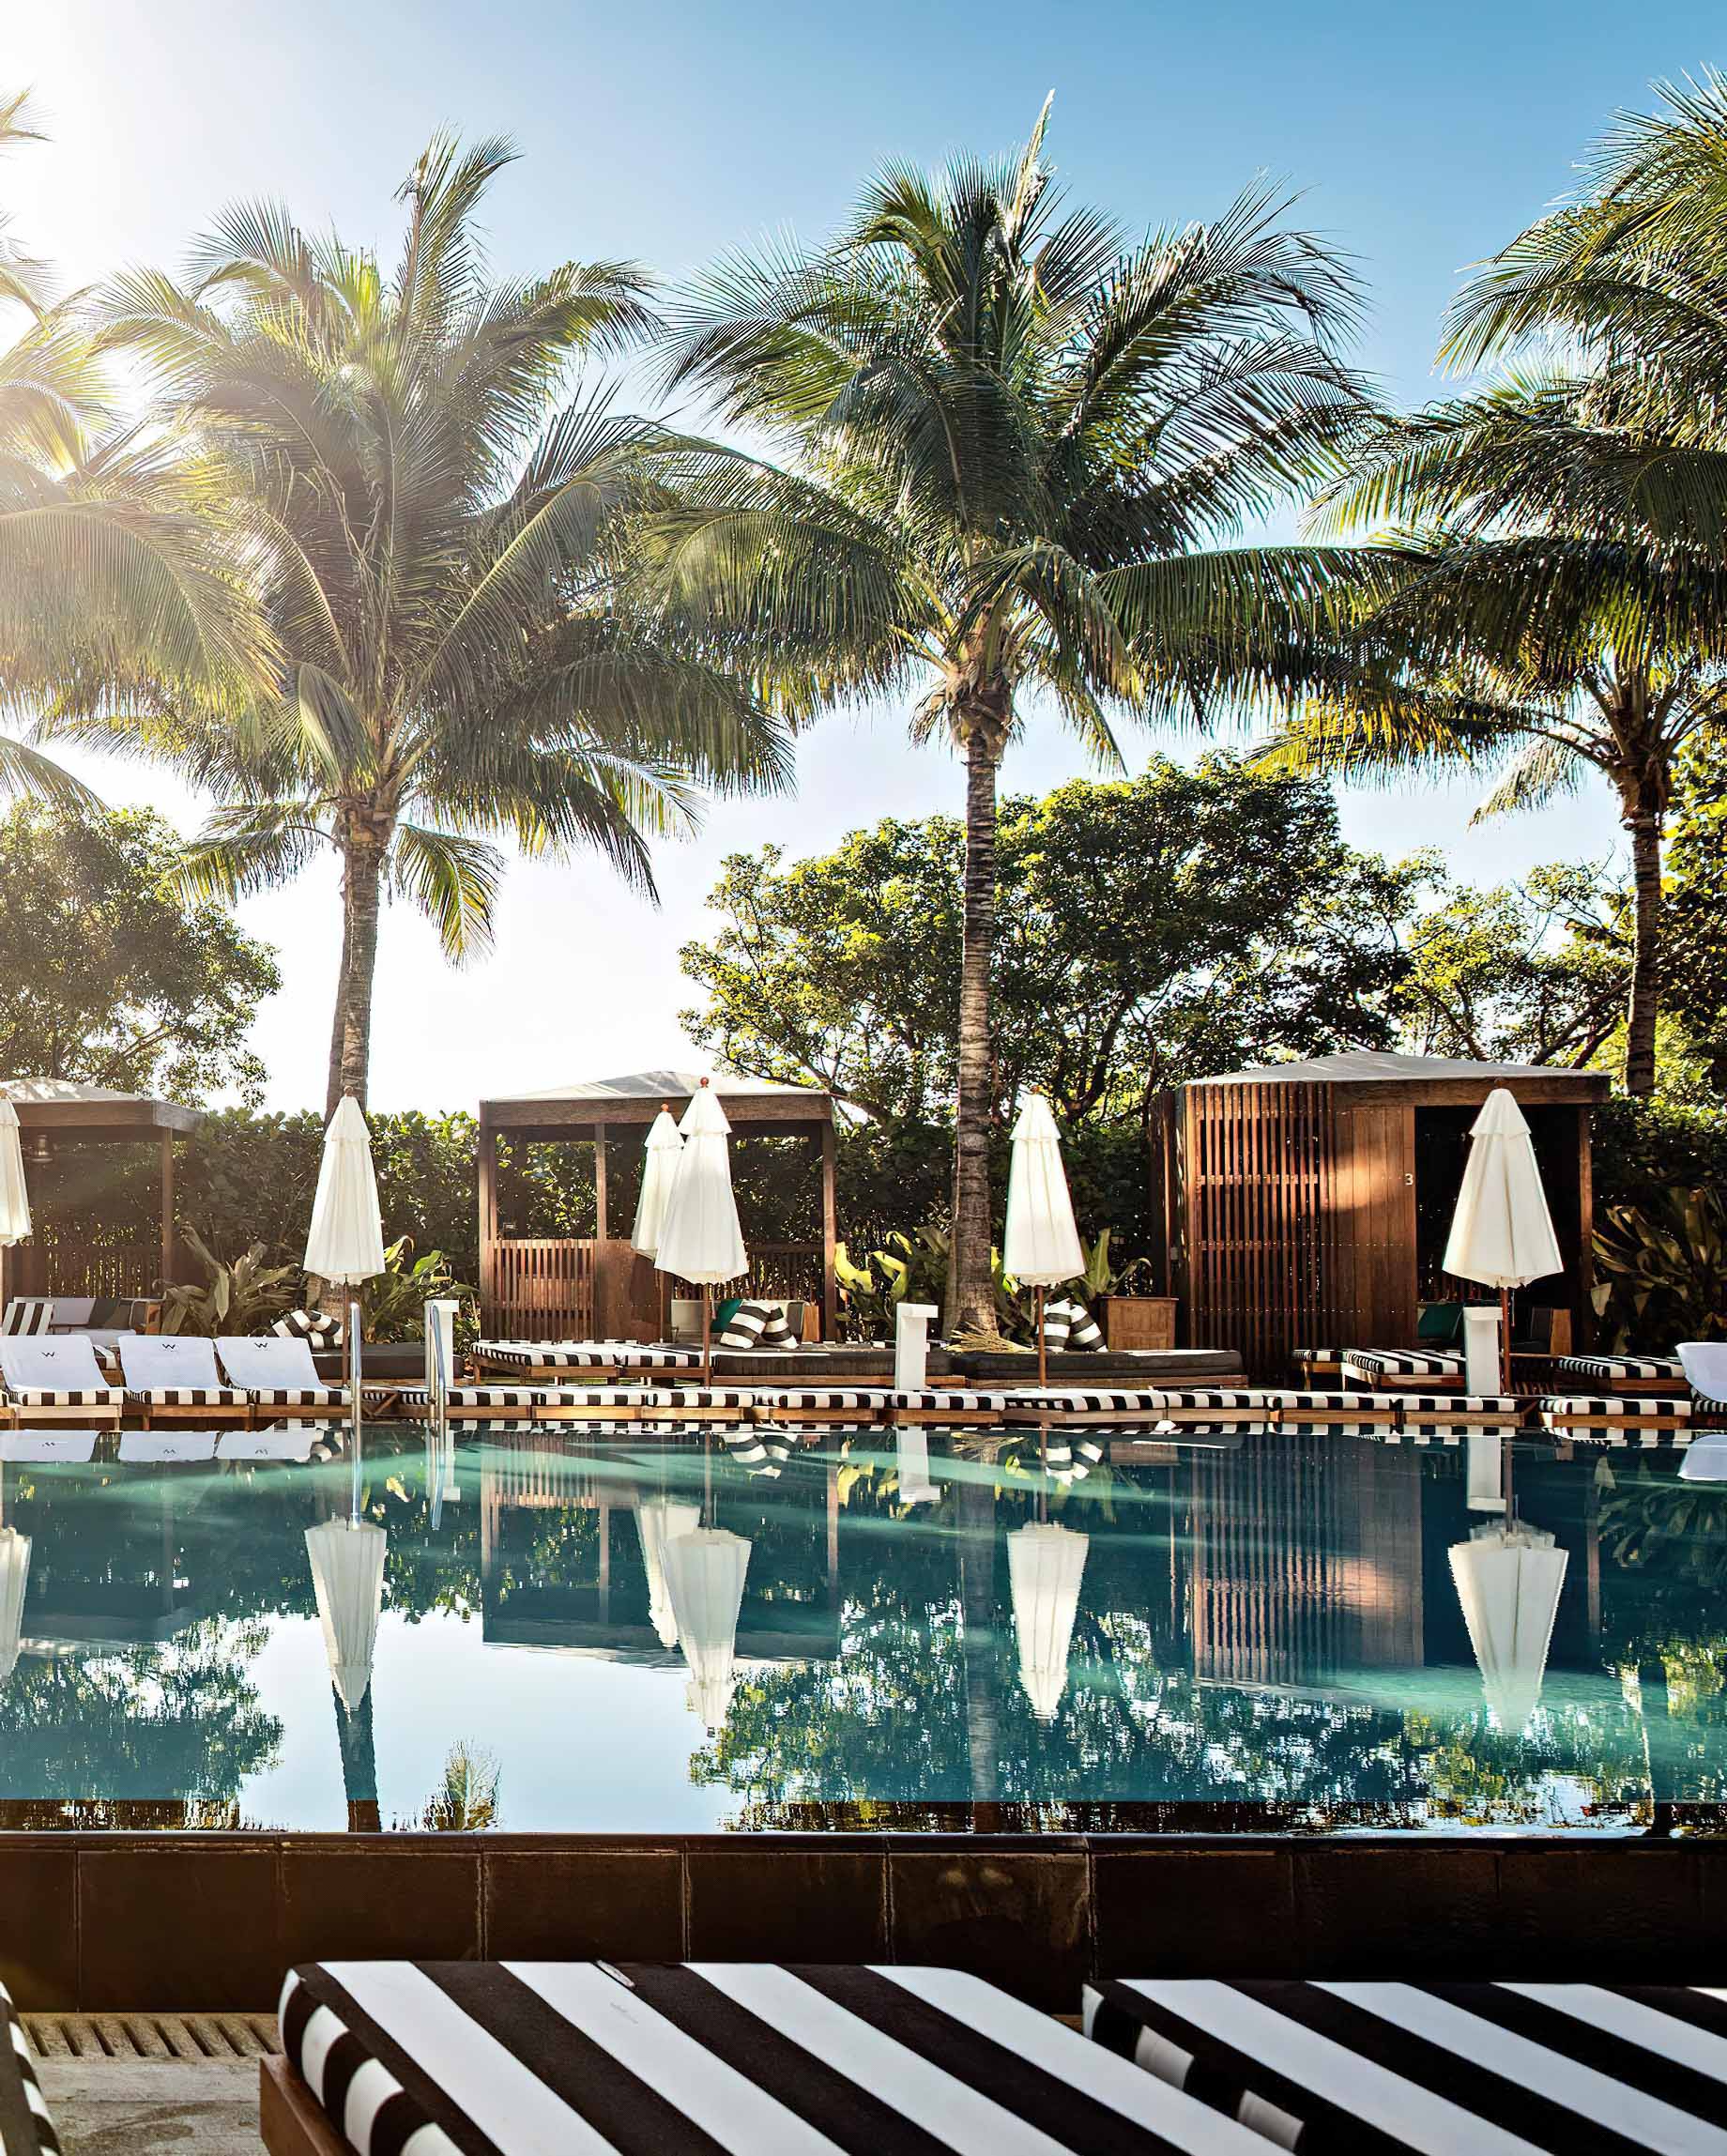 W South Beach Hotel - Miami Beach, FL, USA - Poolside Cabanas